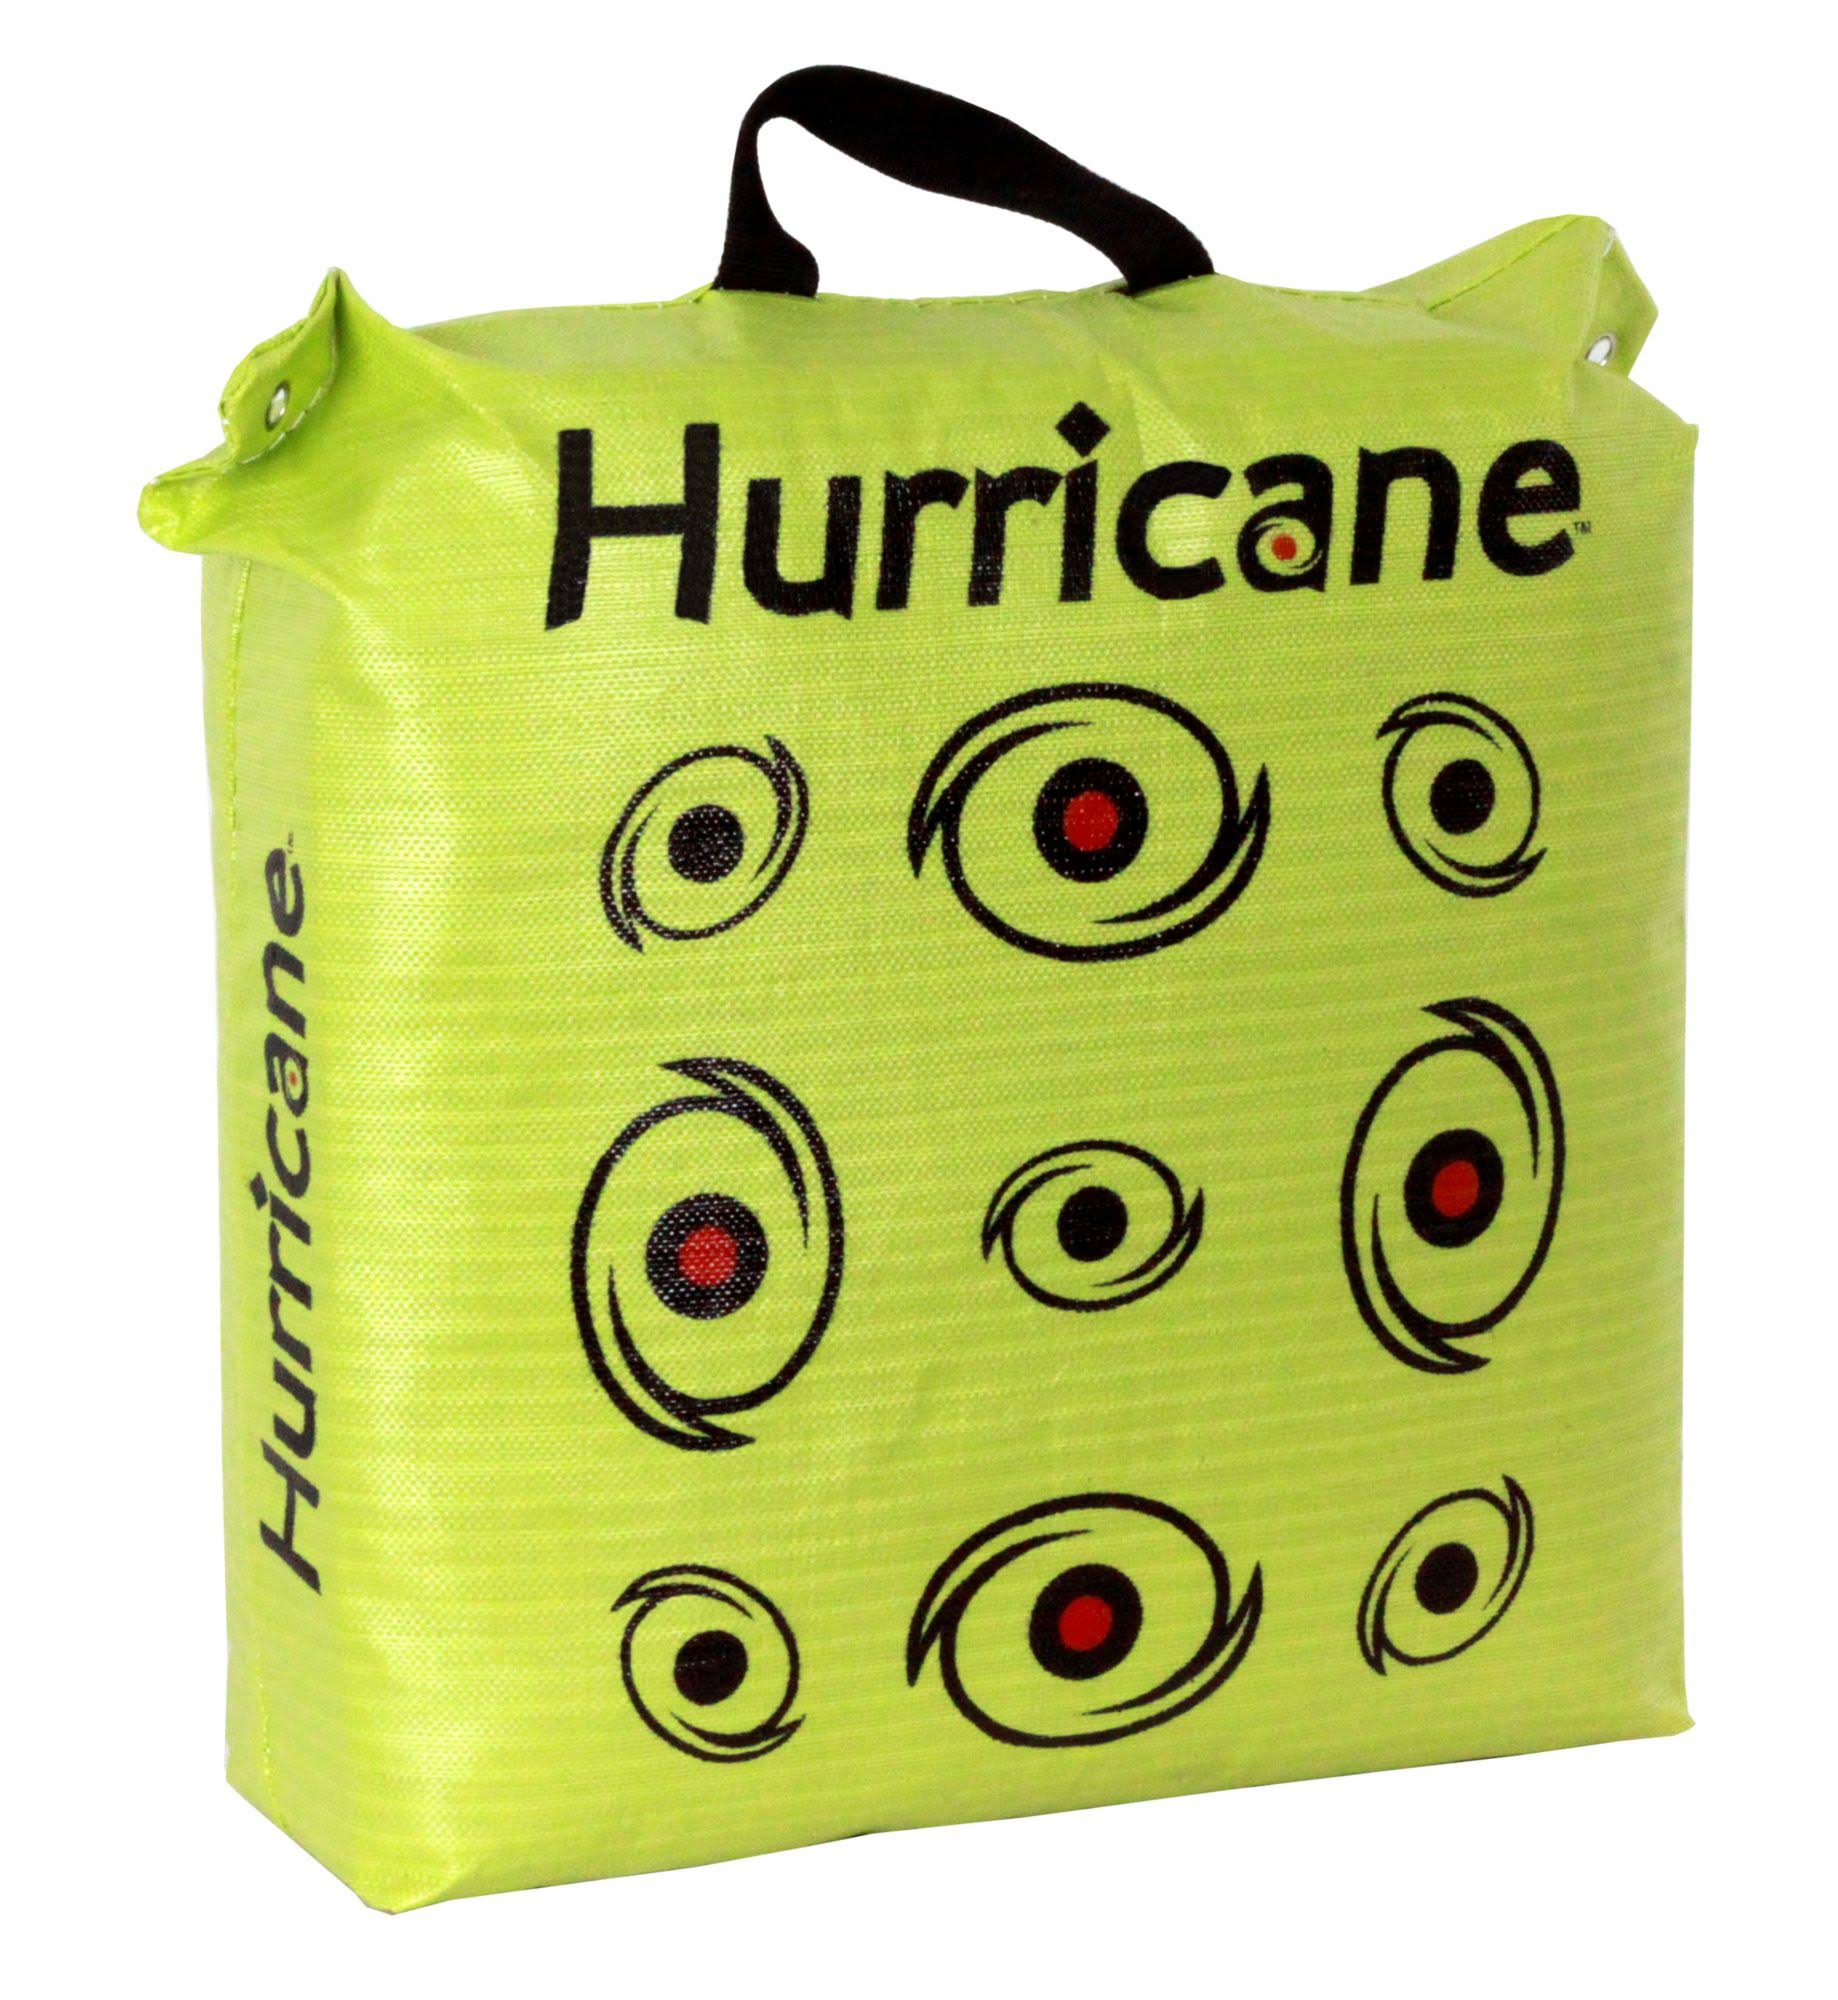 Hurricane Archery Bag Target - 20" x 20" x 10"